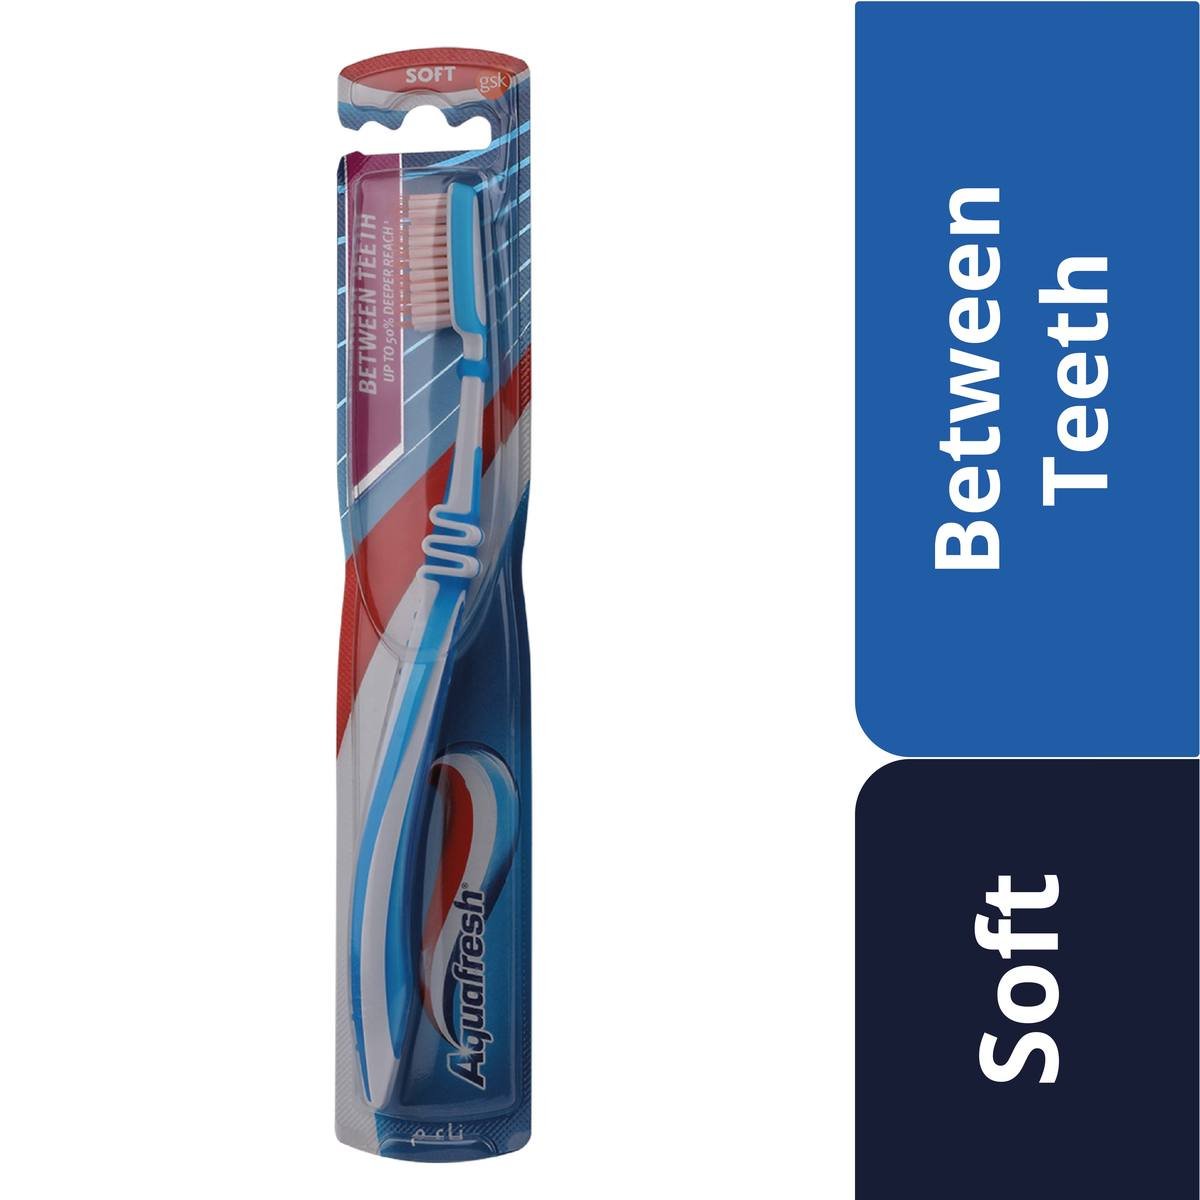 Aquafresh Between Teeth Toothbrush Soft Assorted Color 1 pc